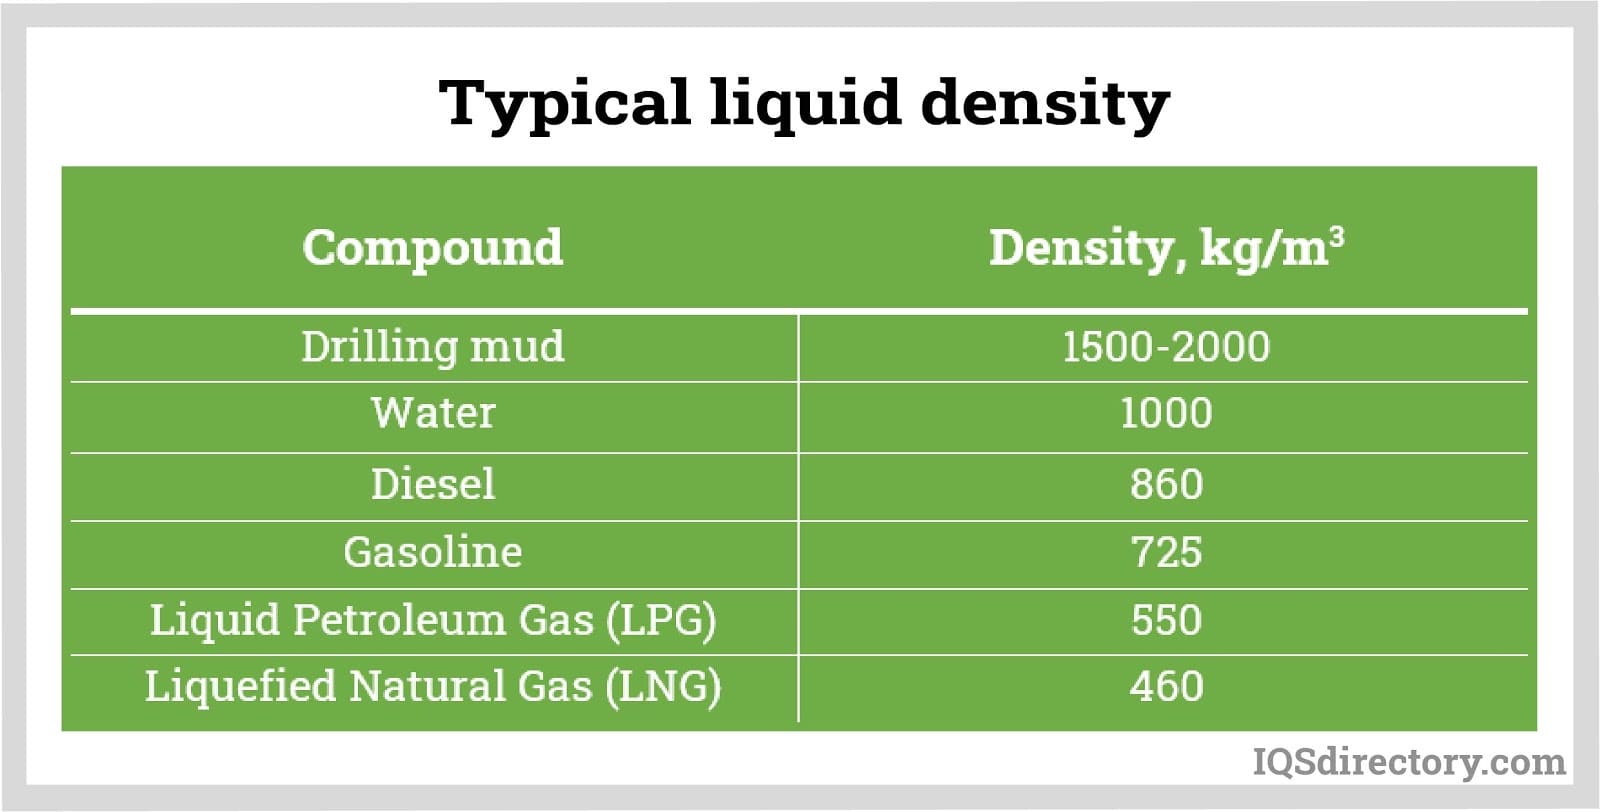 Typical liquid density